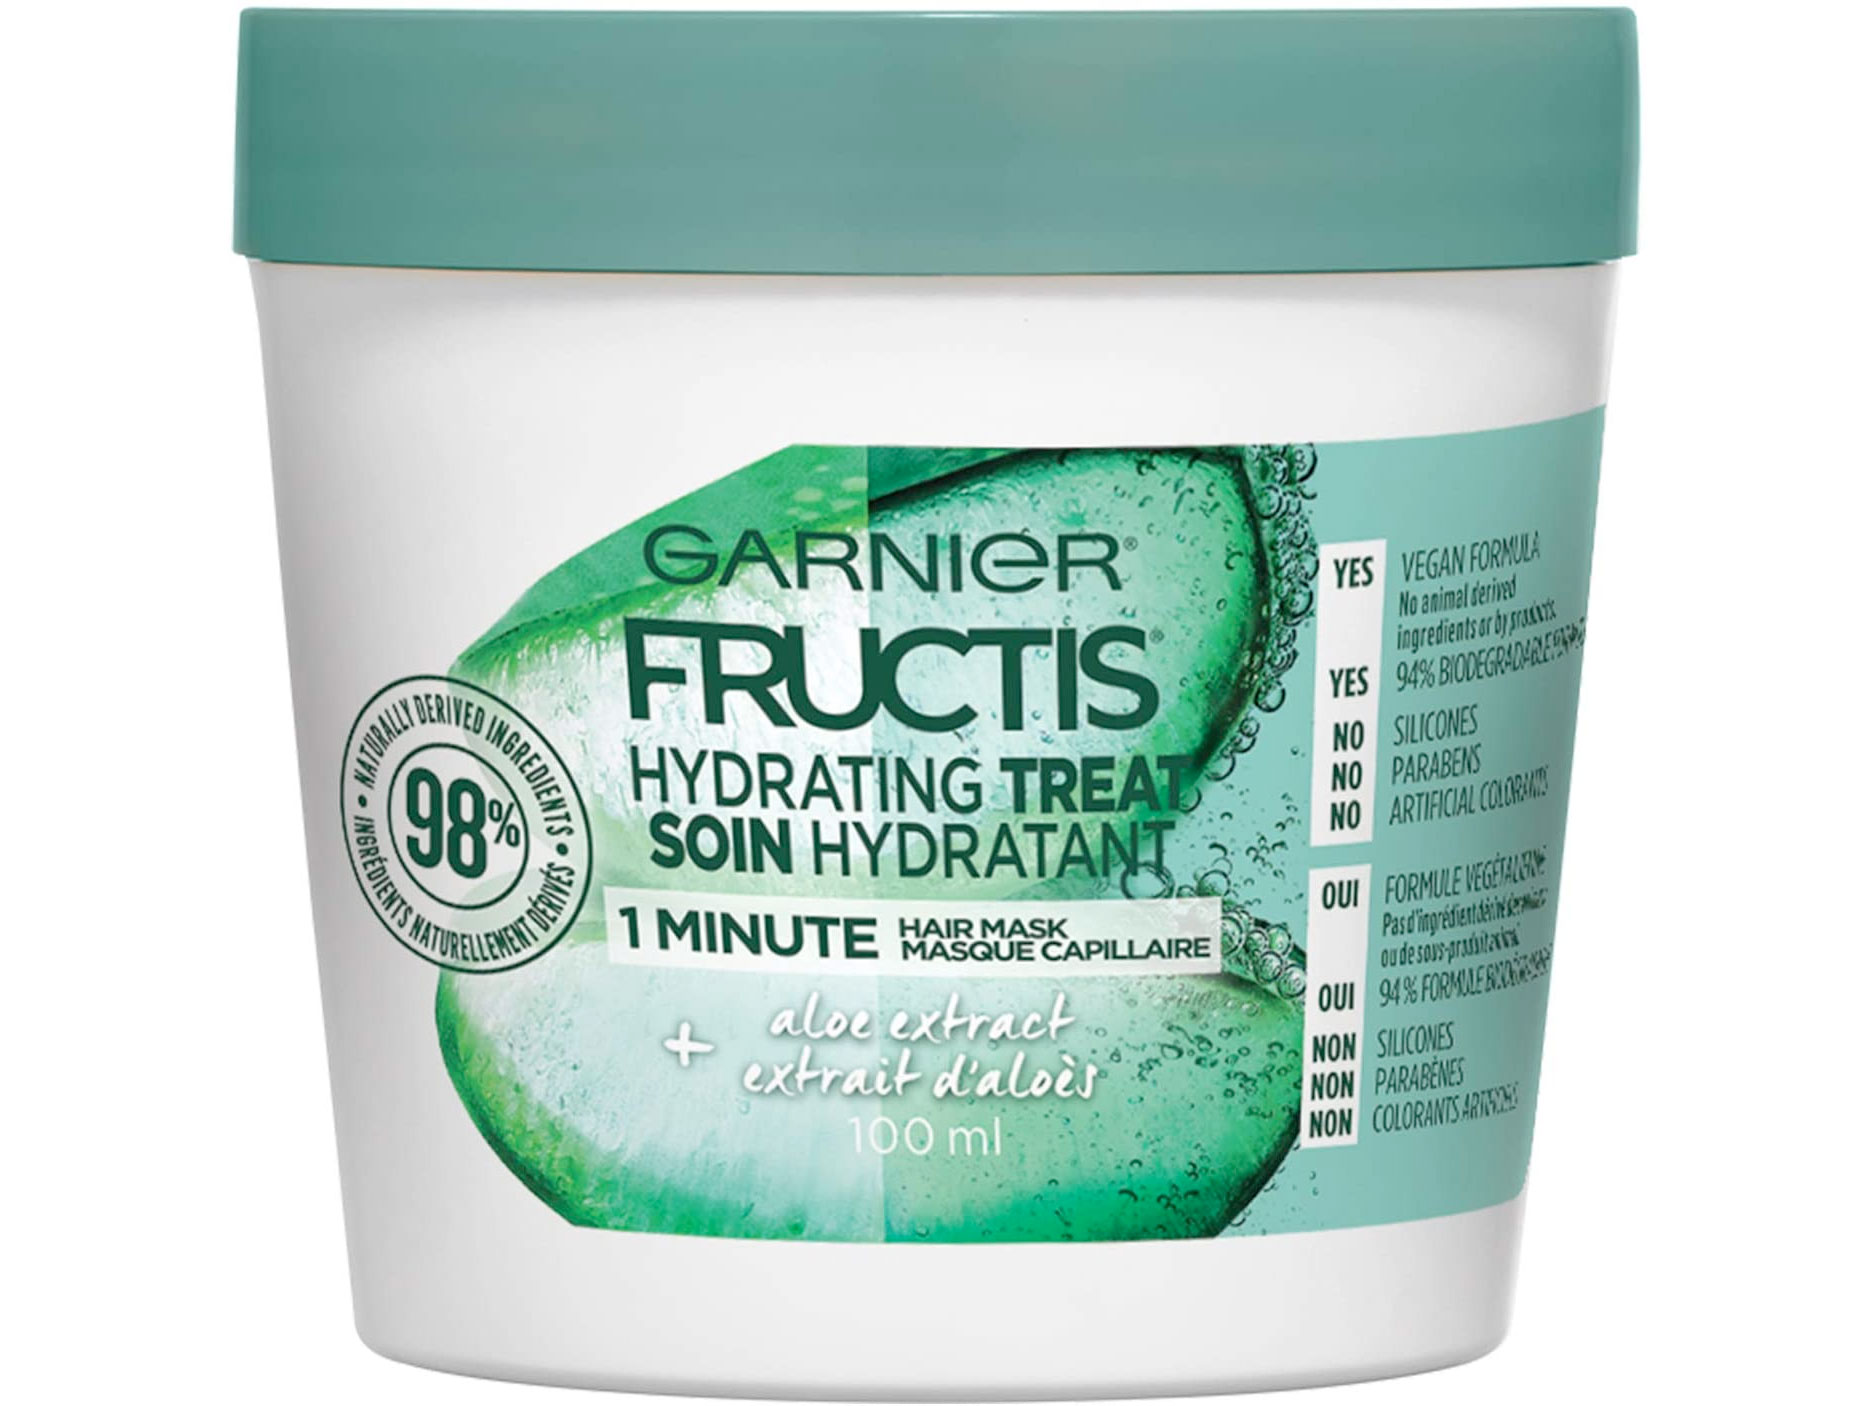 Amazon：Garnier Fructis Hydrating Treat 1 Minute Hair Mask (100ml)只賣$2.99